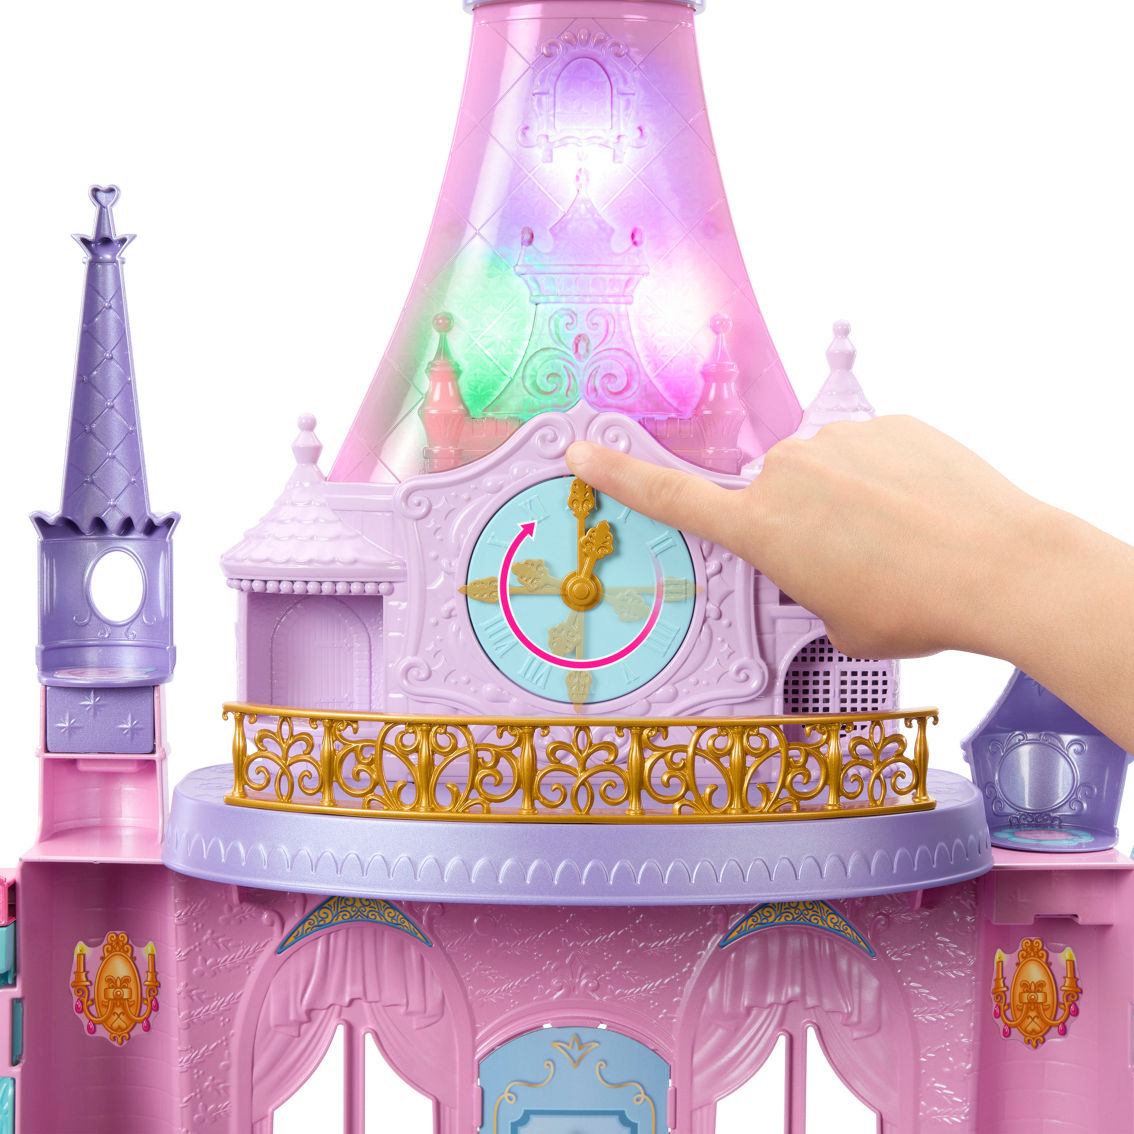 Disney Princess Royal Adventures Castle Dollhouse - Image 3 of 8